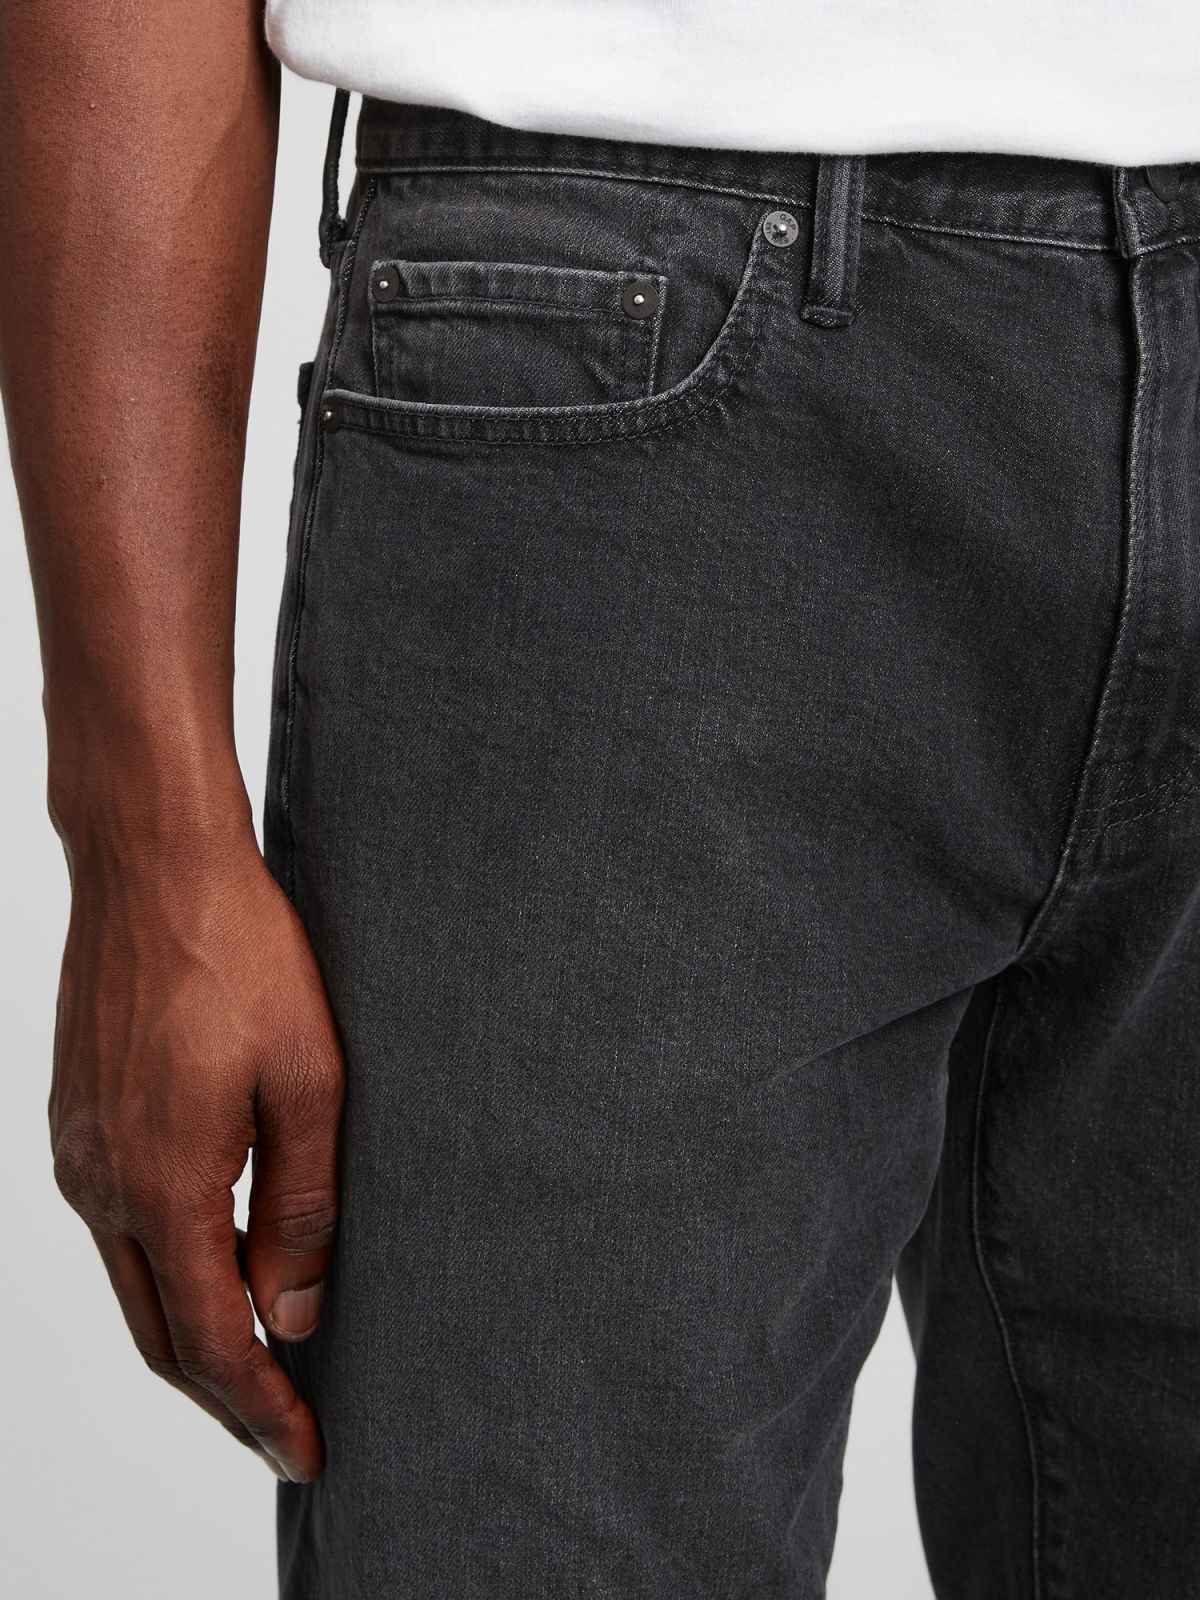  ג'ינס בייסיק בגזרה ישרה של GAP